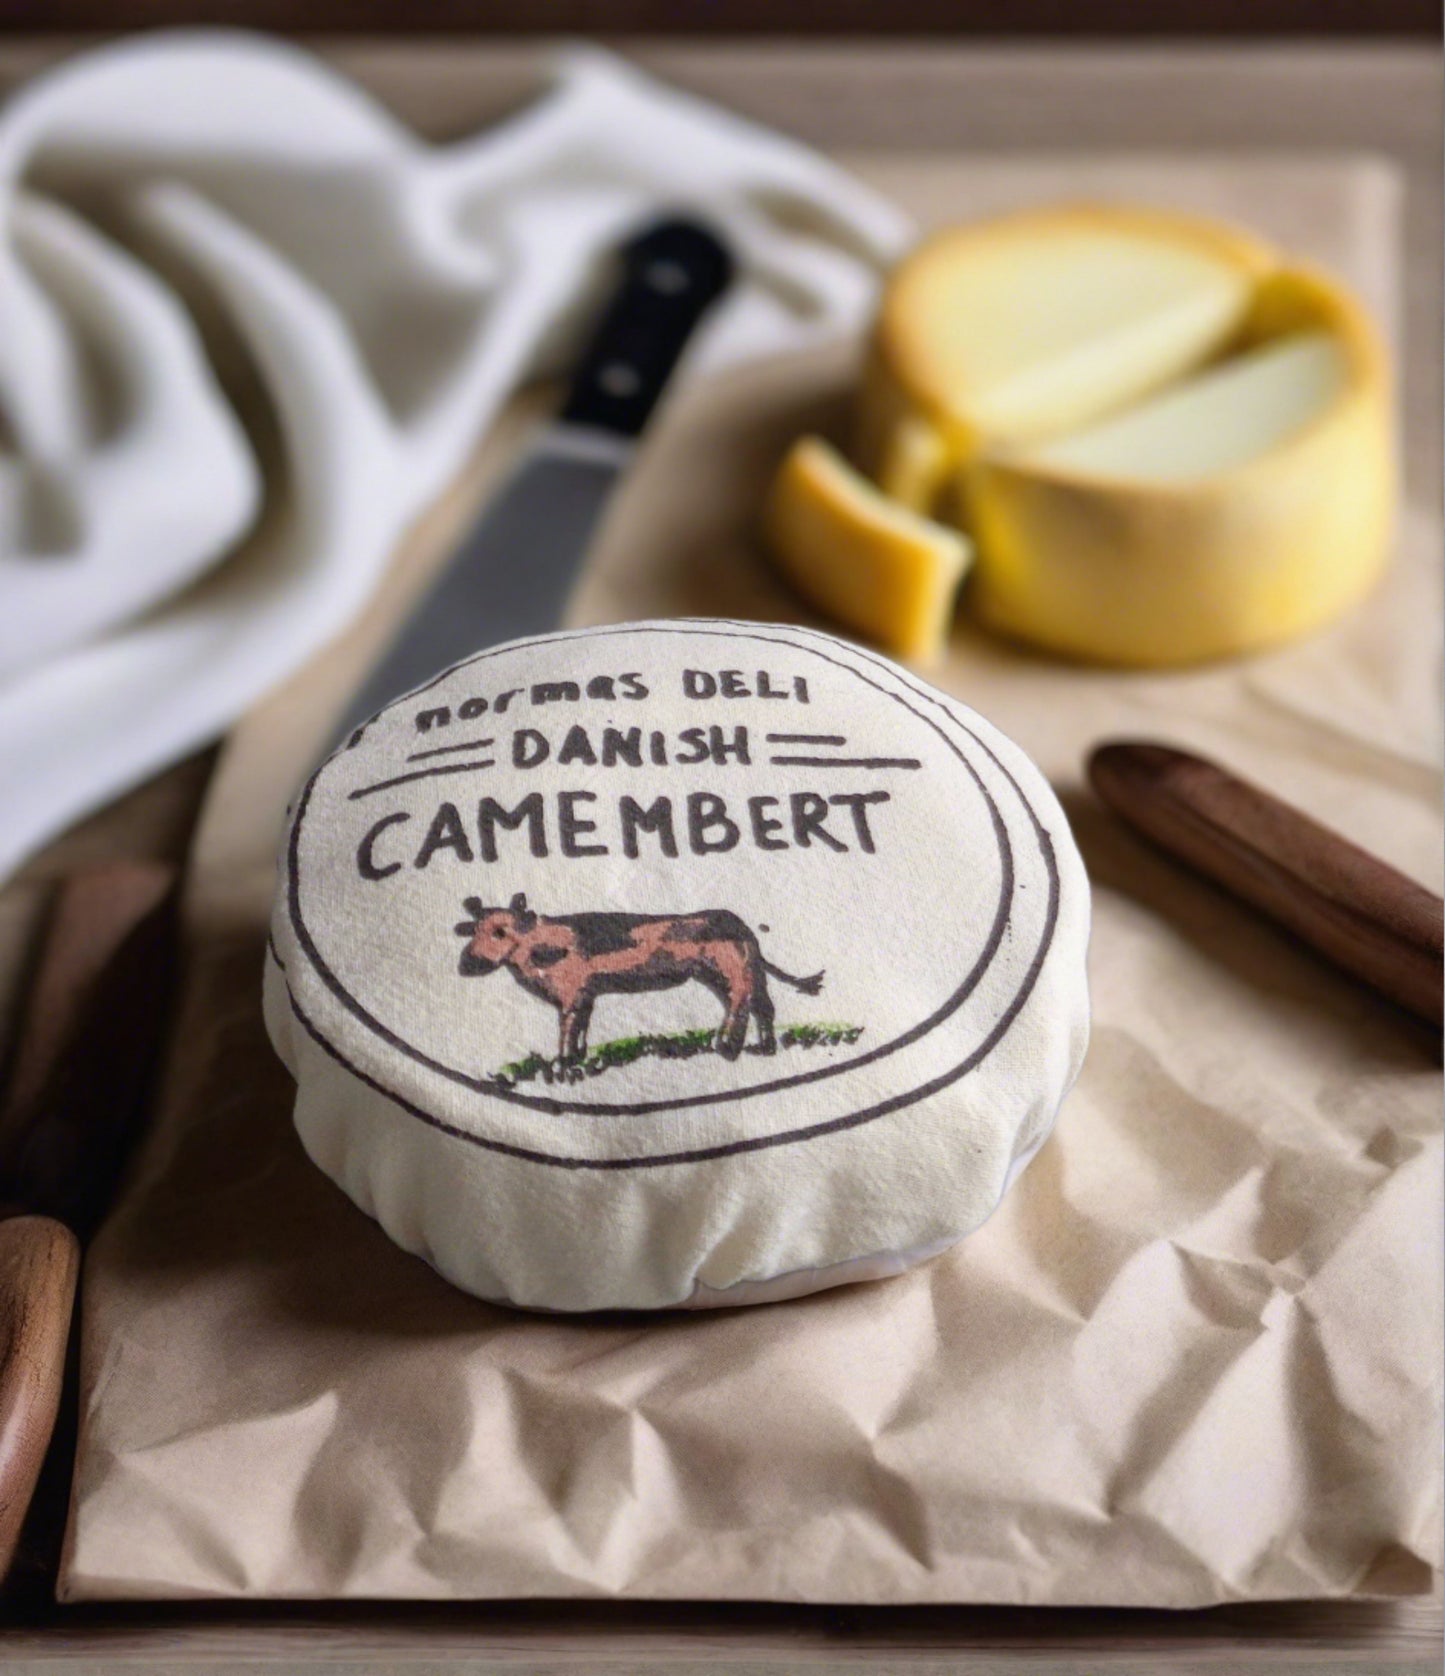 Camembert and cracker